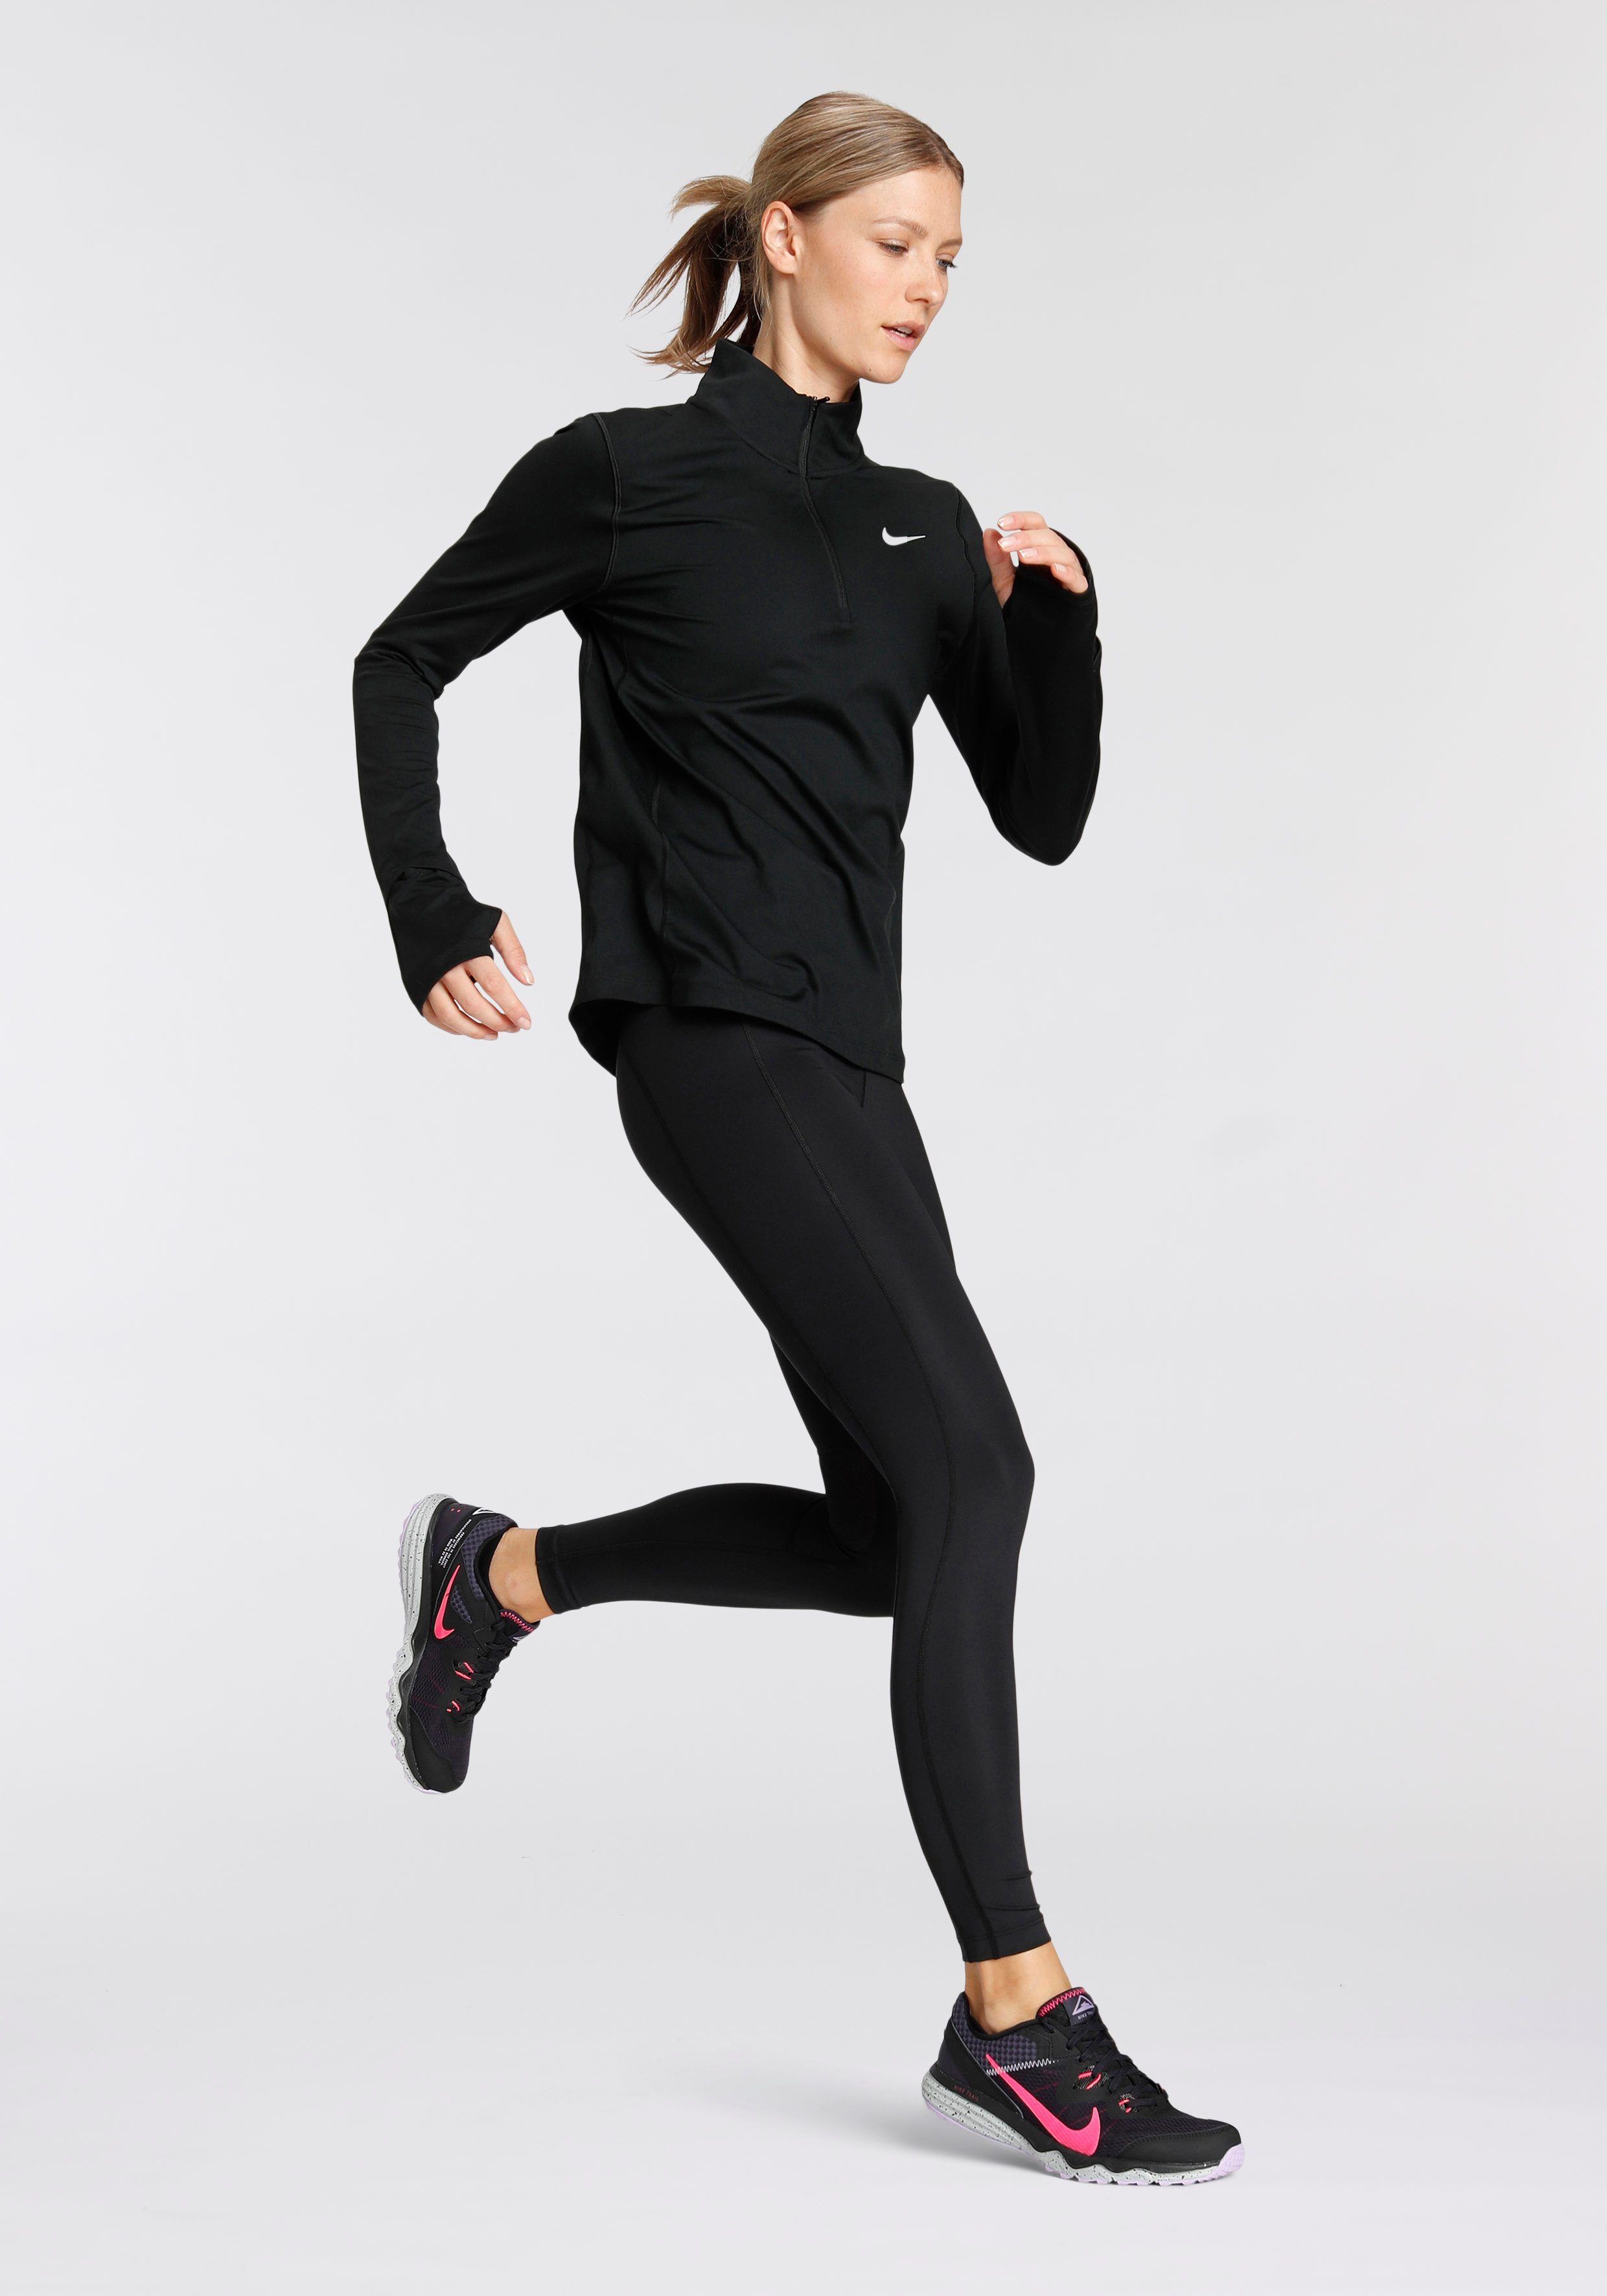 Nike Lauftights EPIC FAST schwarz MID-RISE LEGGINGS RUNNING WOMEN'S POCKET